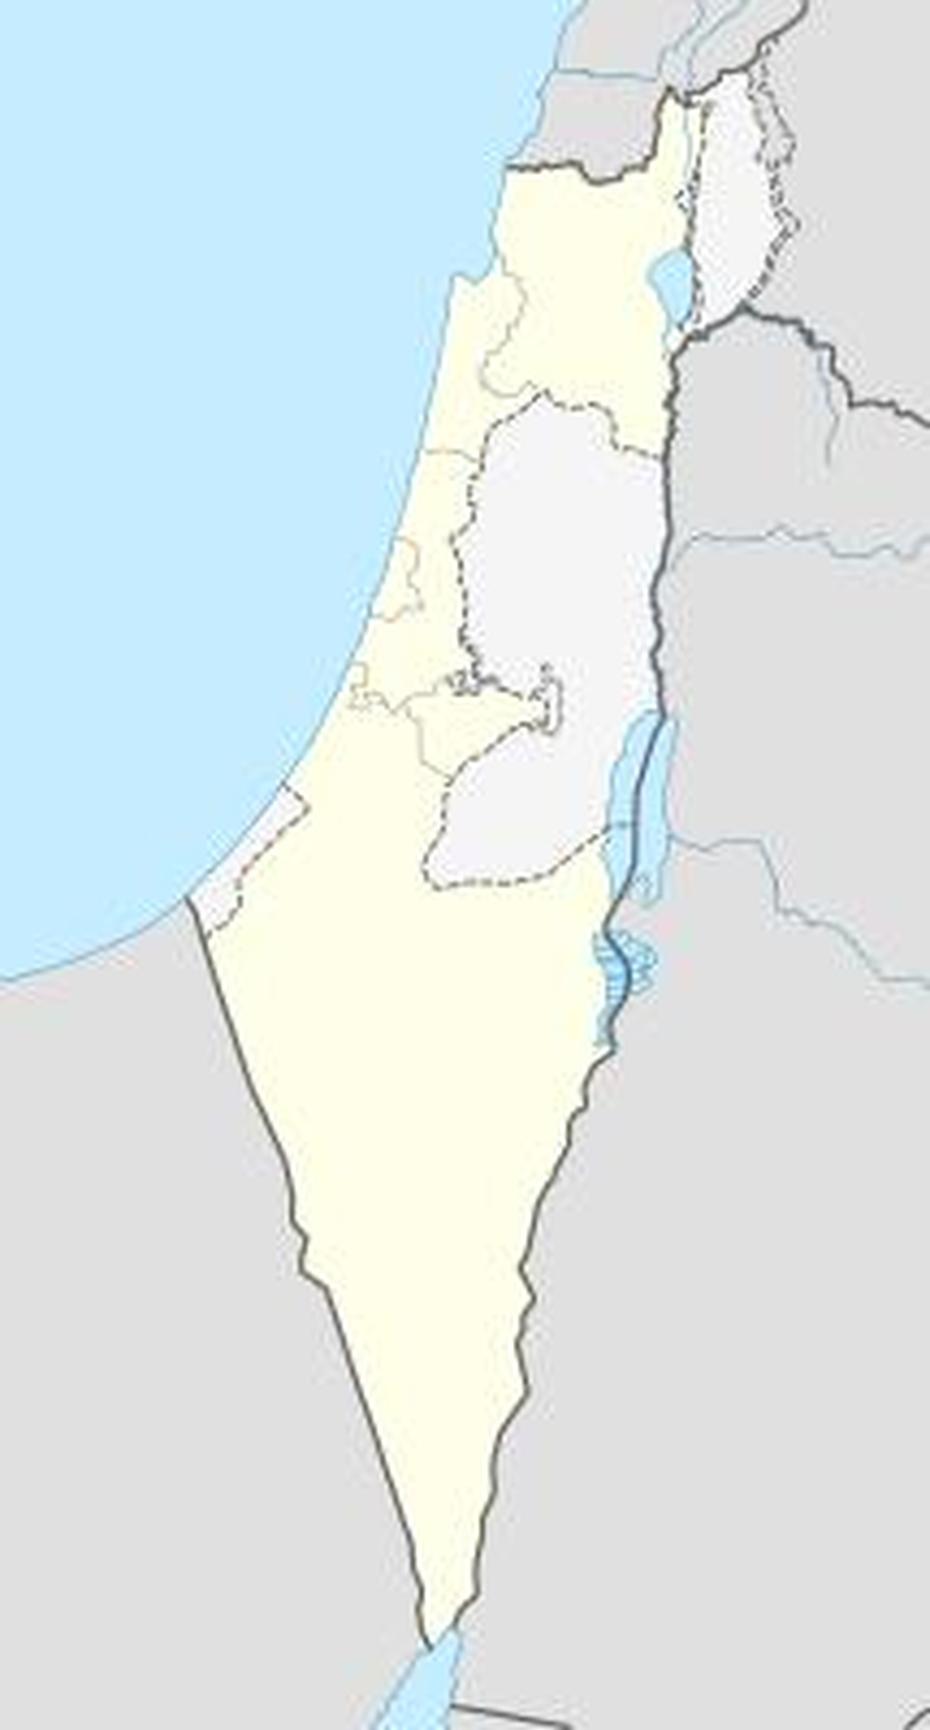 Kiryat Ata, Kiryat Shmona Israel, Bialik, Qiryat Bialik, Israel